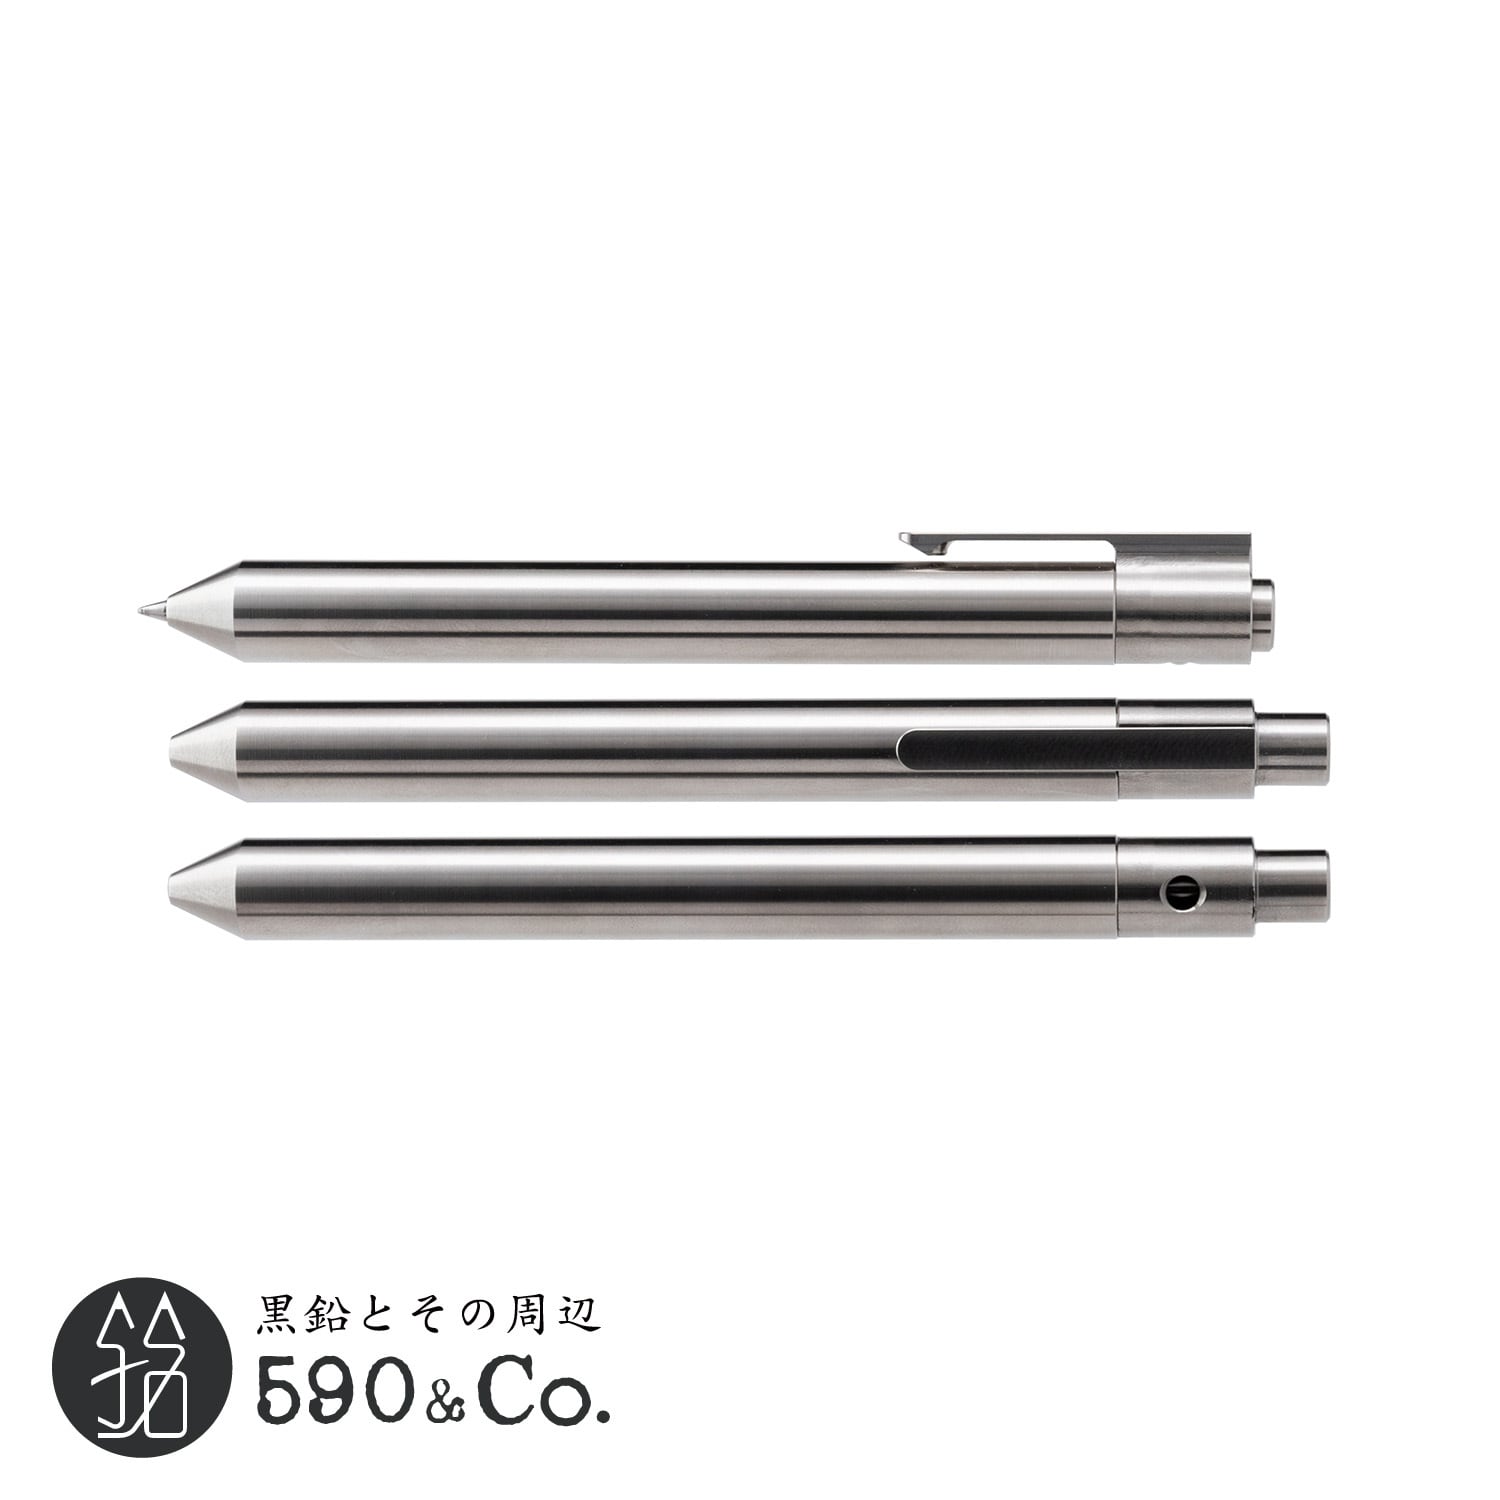 【Autmog】47 Click Pen Conical Nose Pilot G2 (チタン) 590Co.